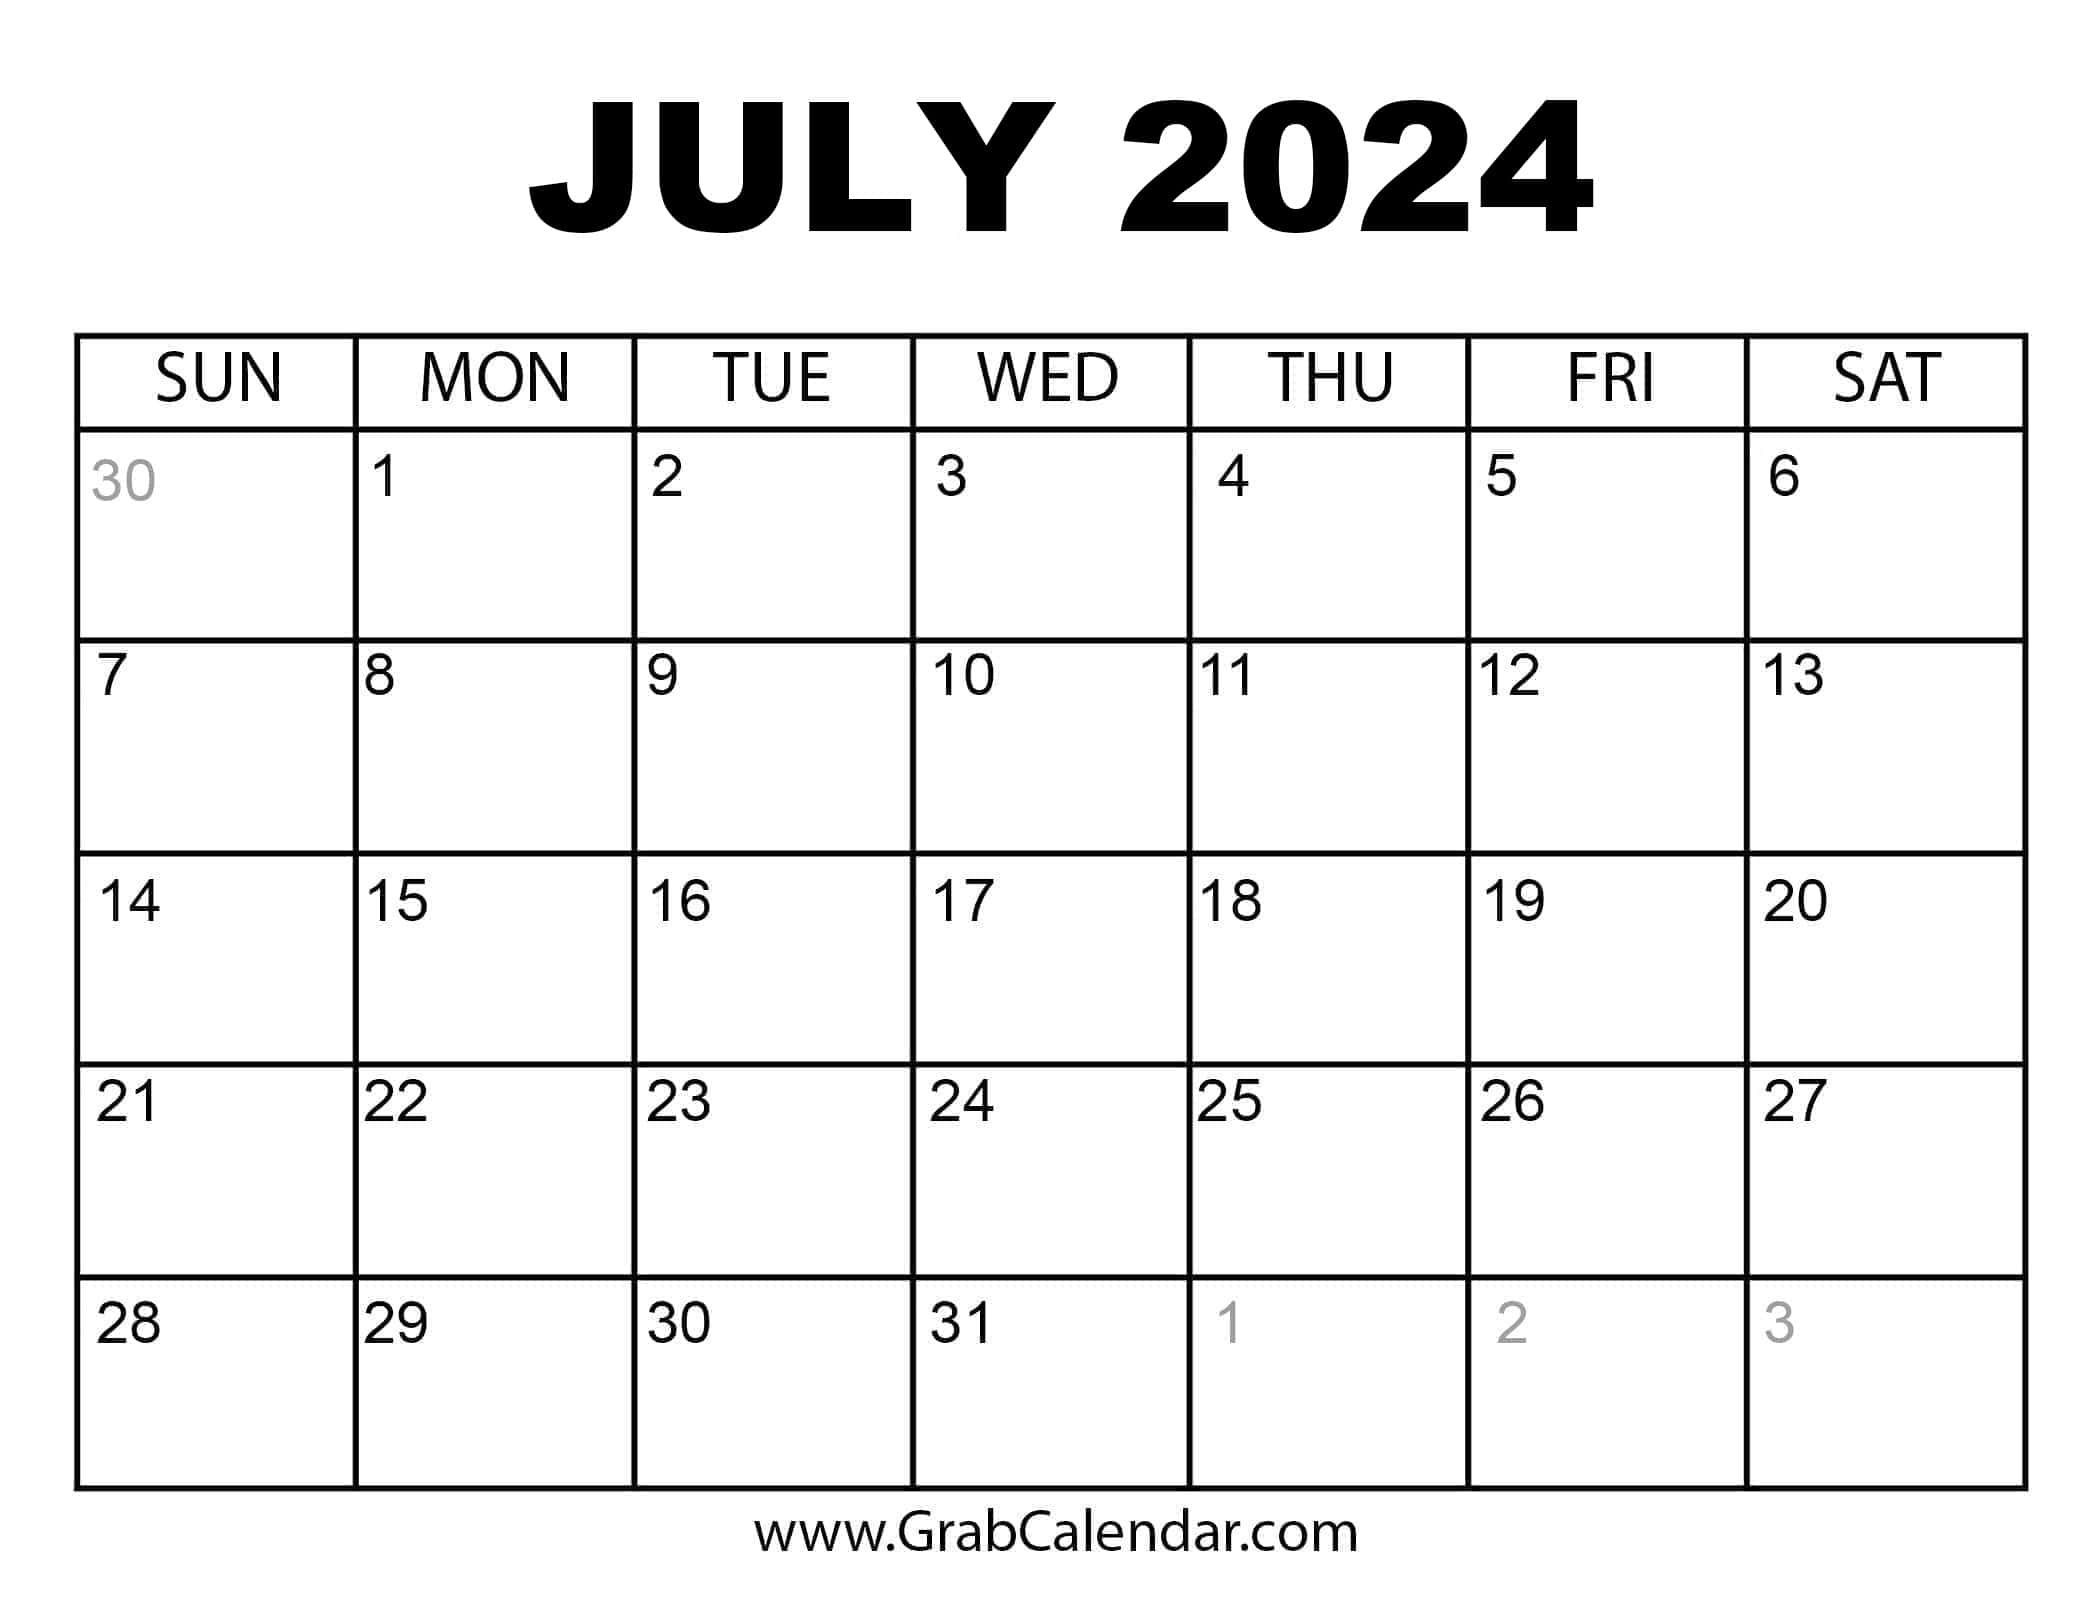 Printable July 2024 Calendar in Show Me a July 2024 Calendar